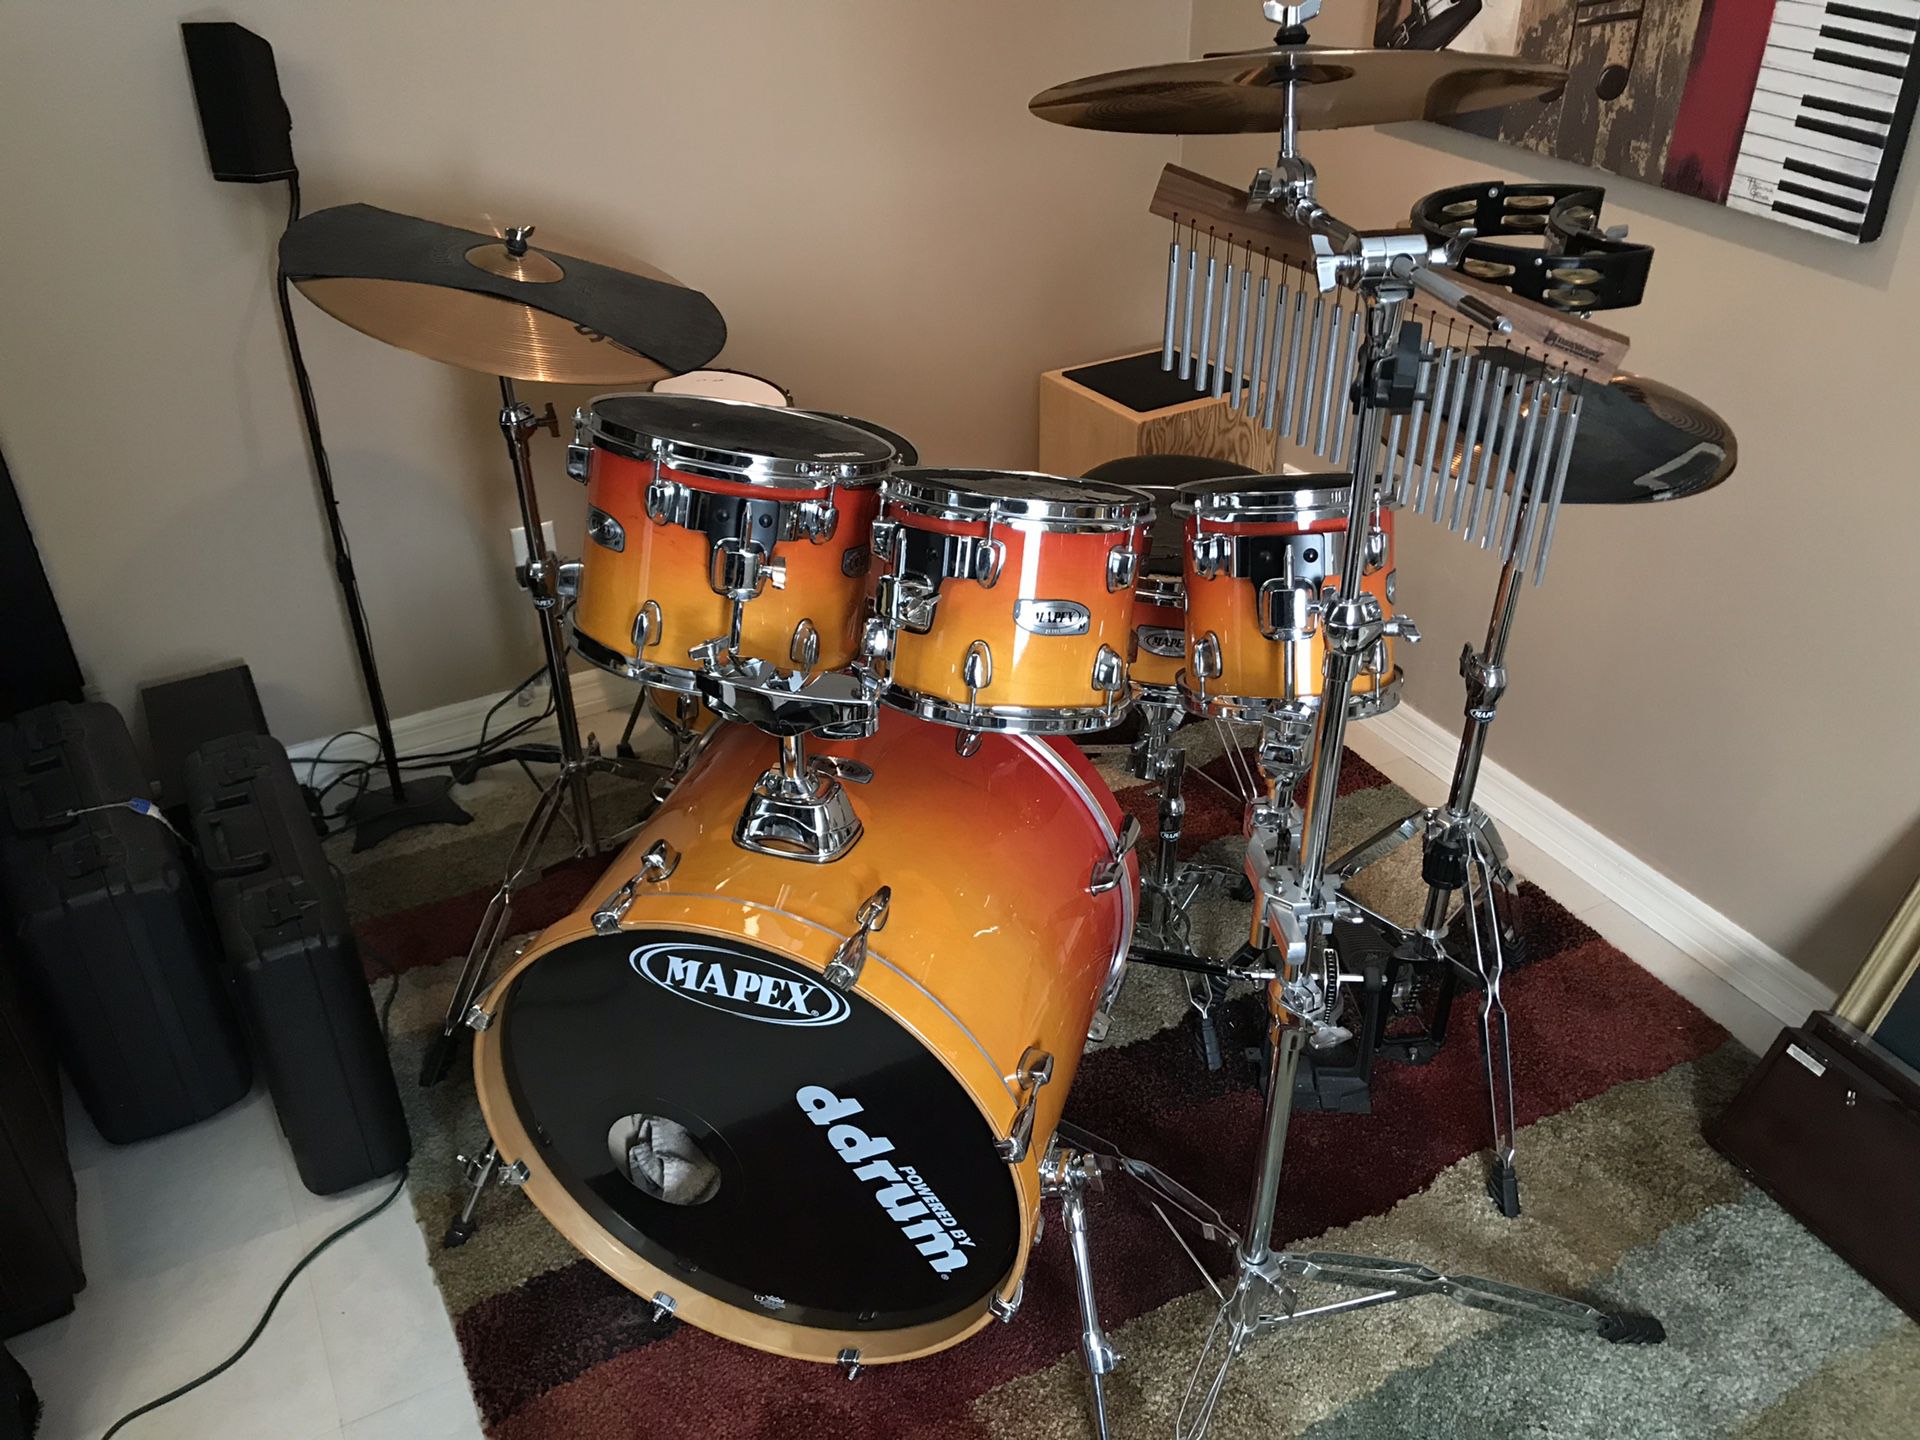 MAPEX 6-piece drum set